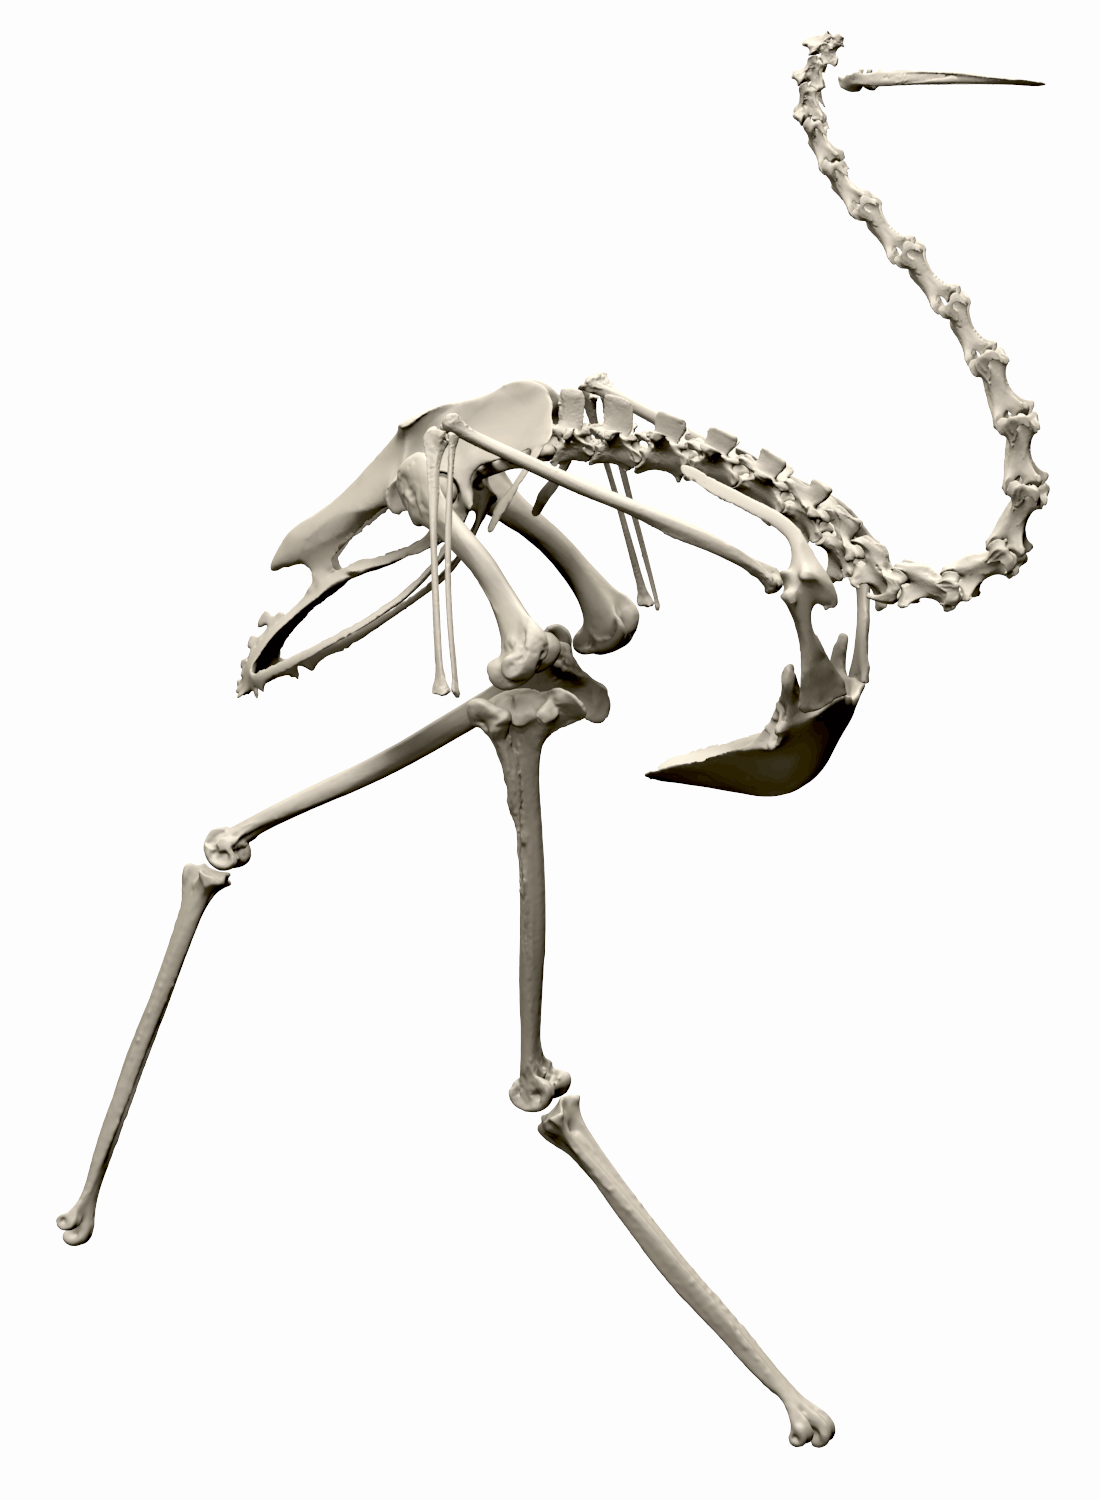 Rhea americana skeleton